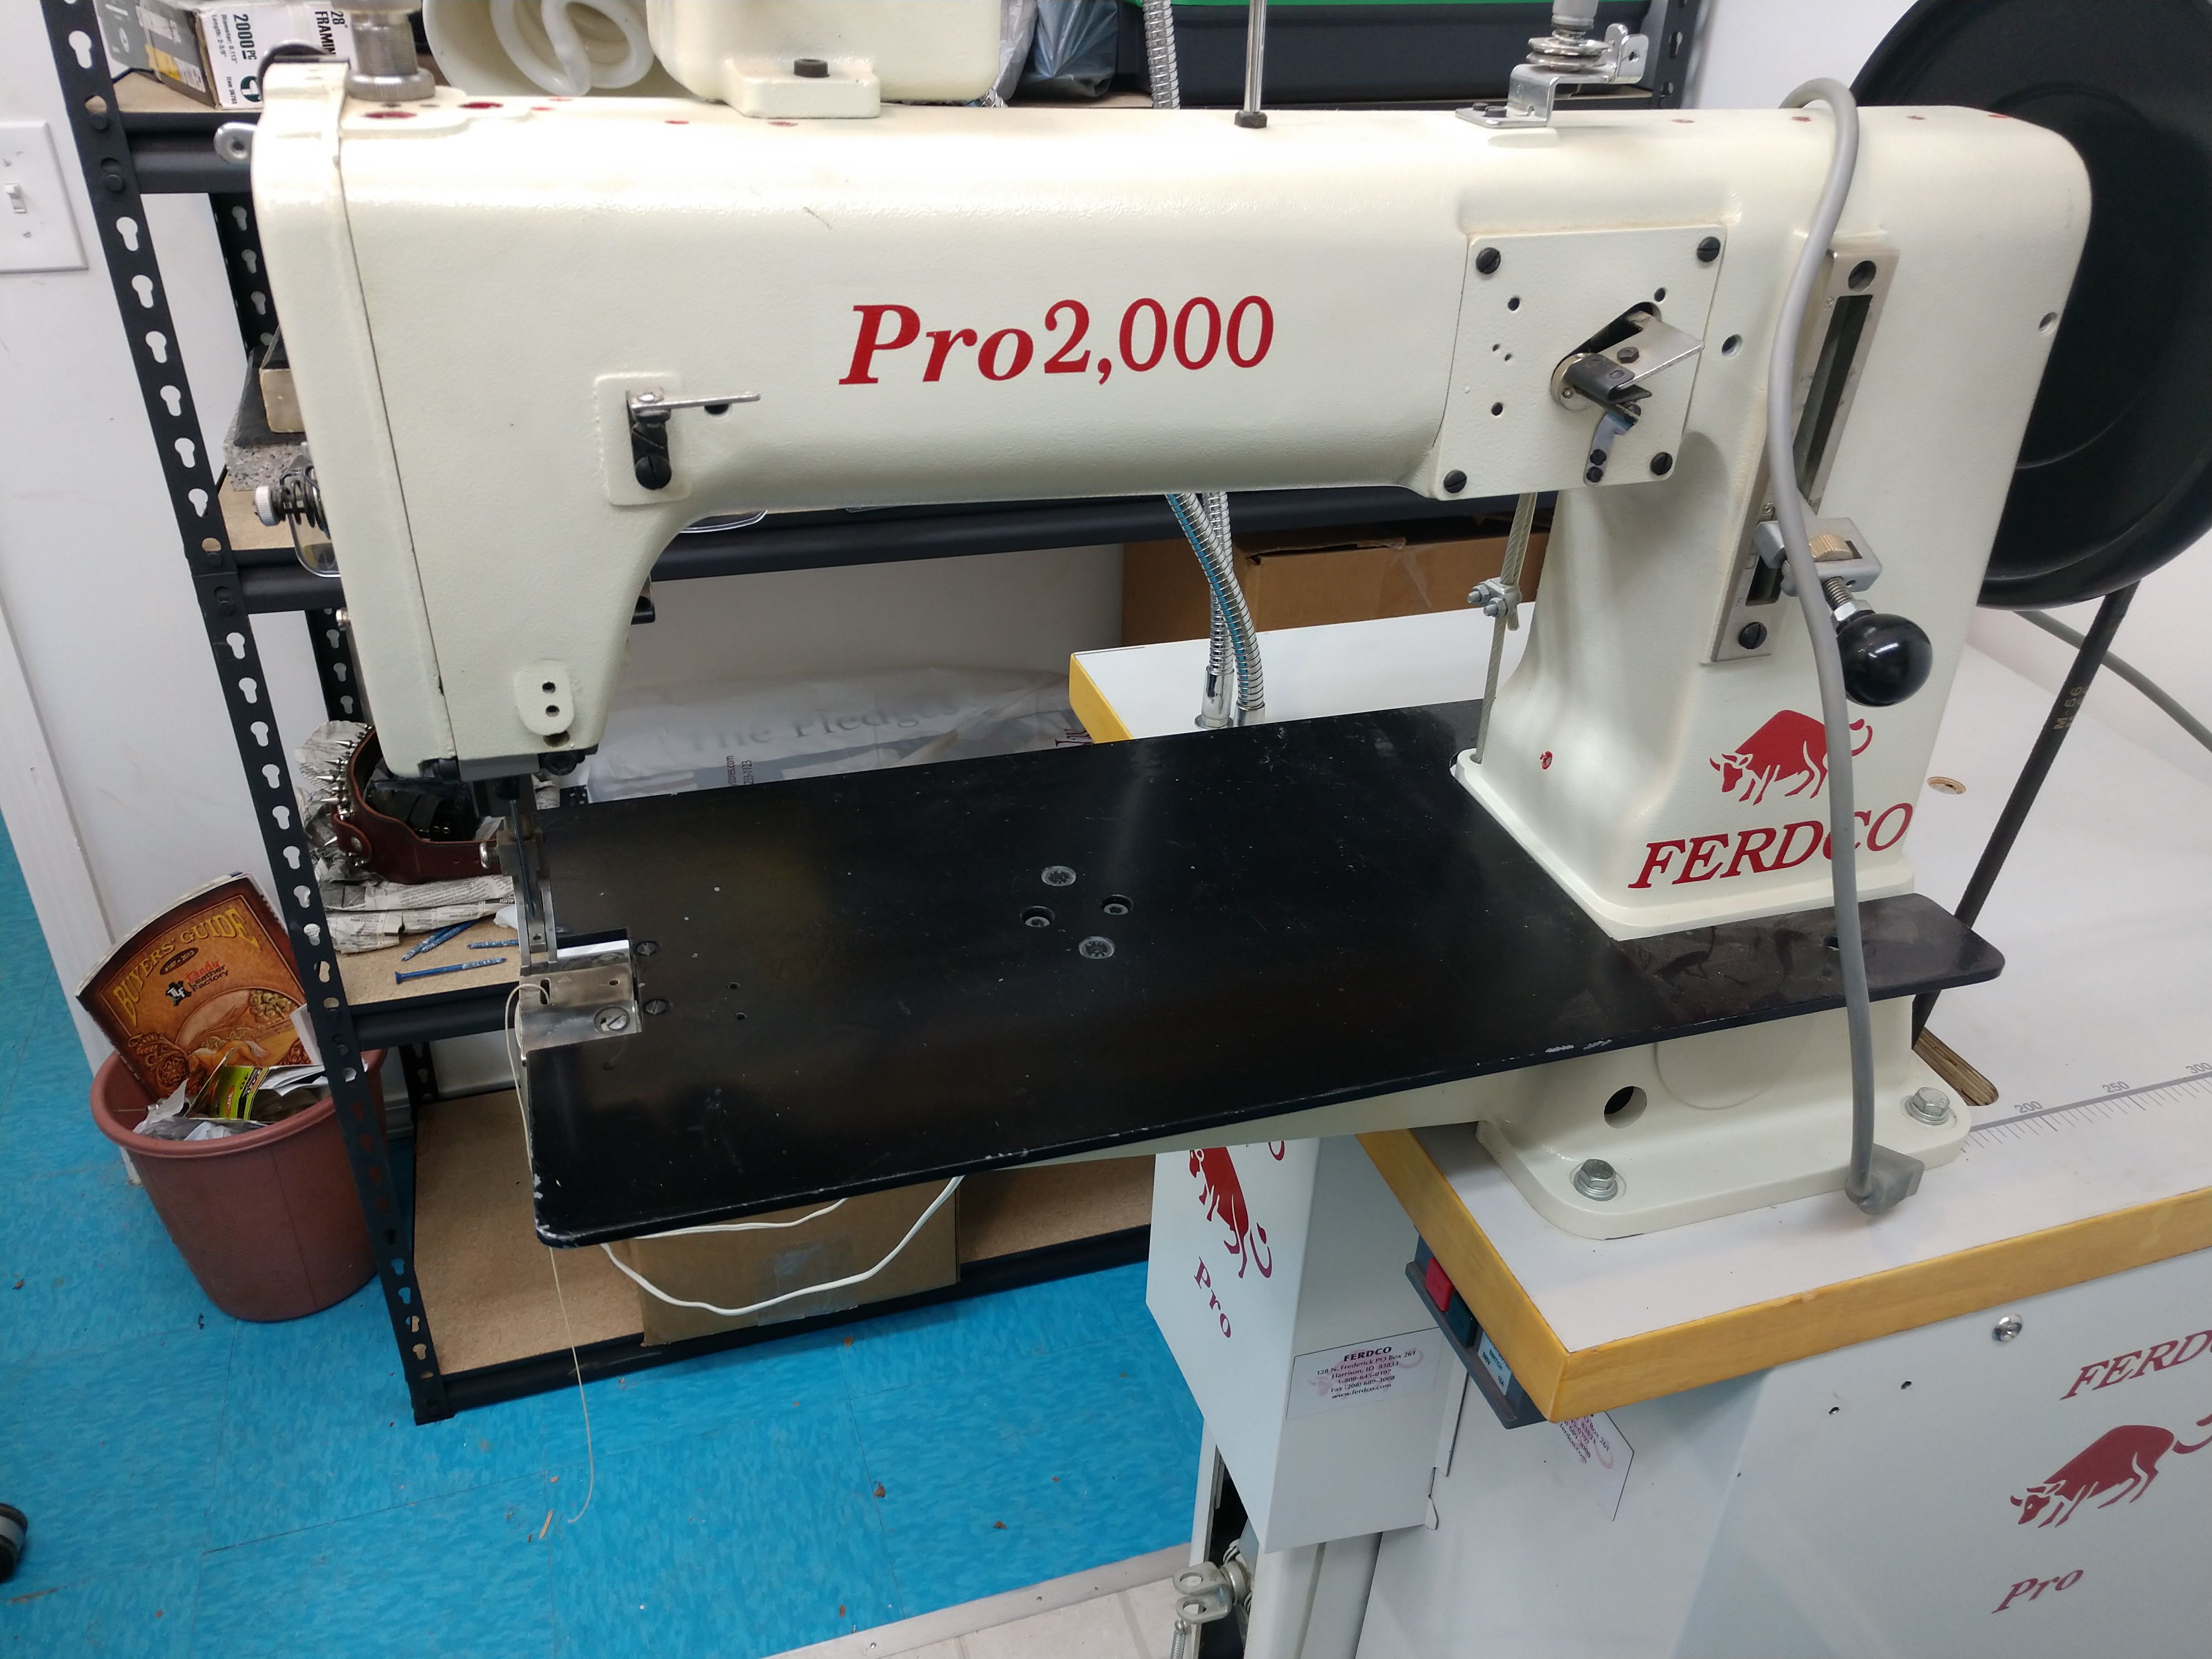 Ferdco Pro 2000 Sewing Machine